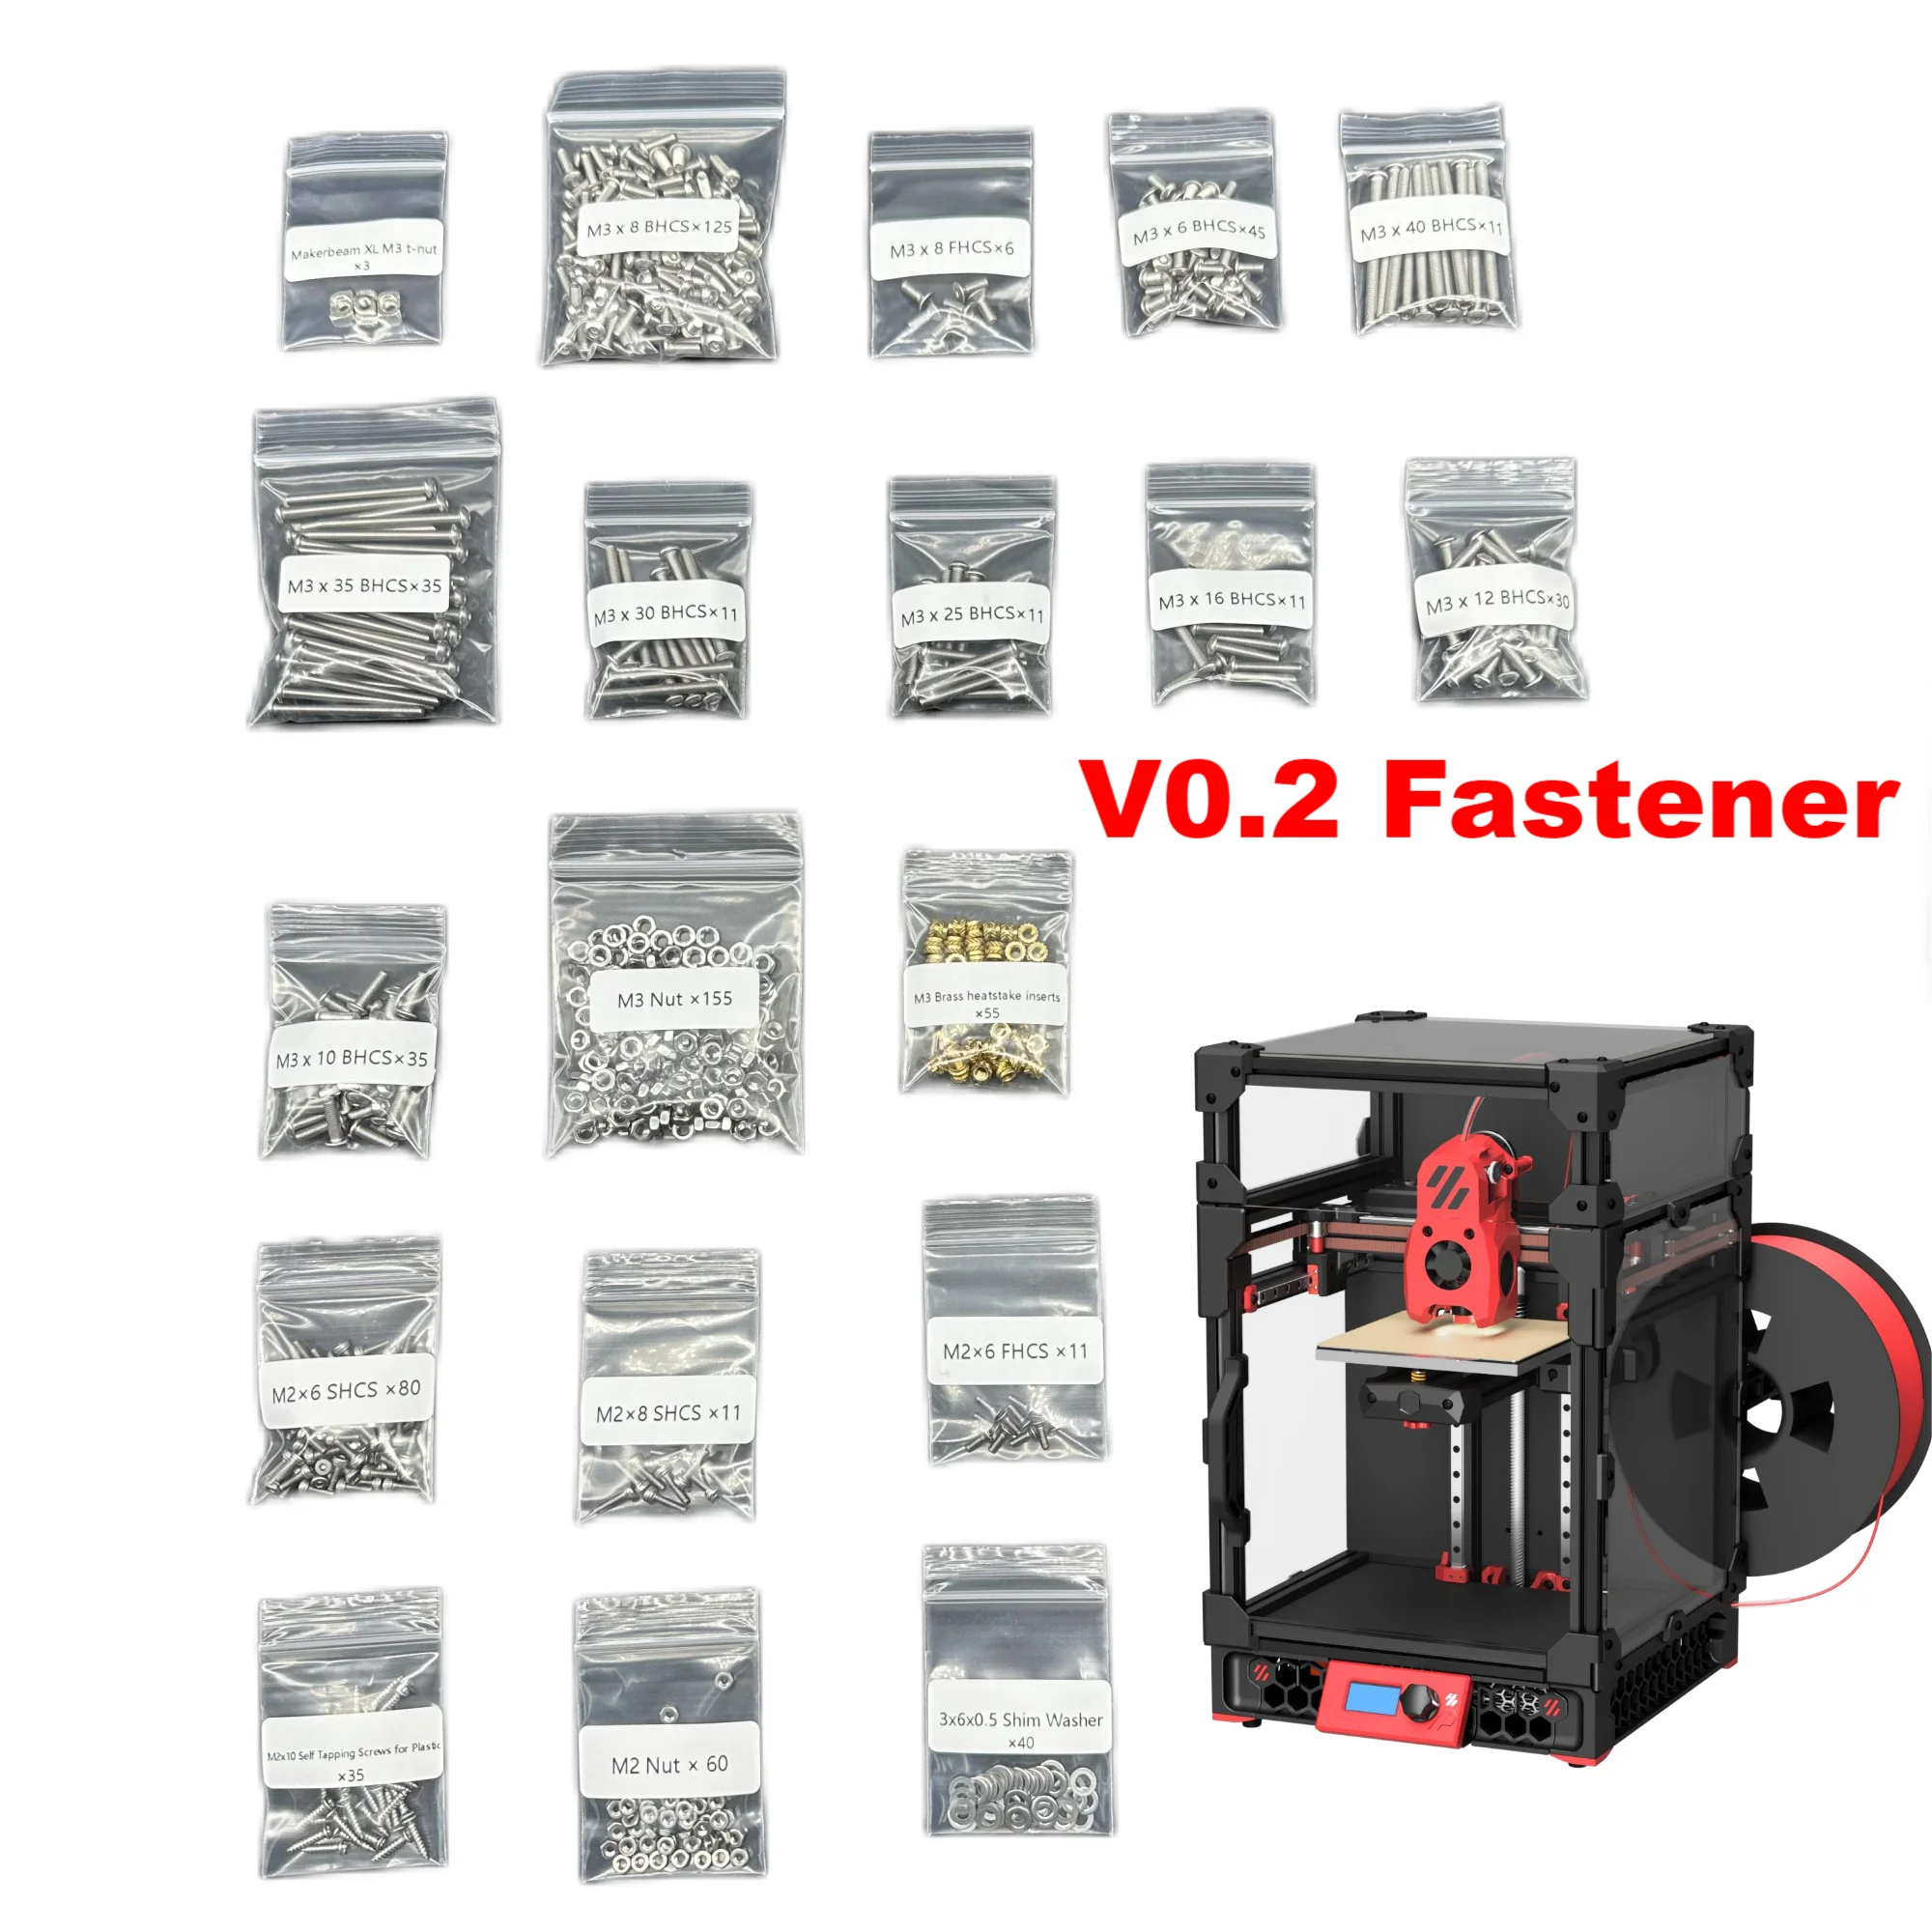 Voron 0.2 Full set of Fasteners 10% Extra Hardware Kit Screws Nuts DIY Project Full Kits For Voron 0.2 Printer